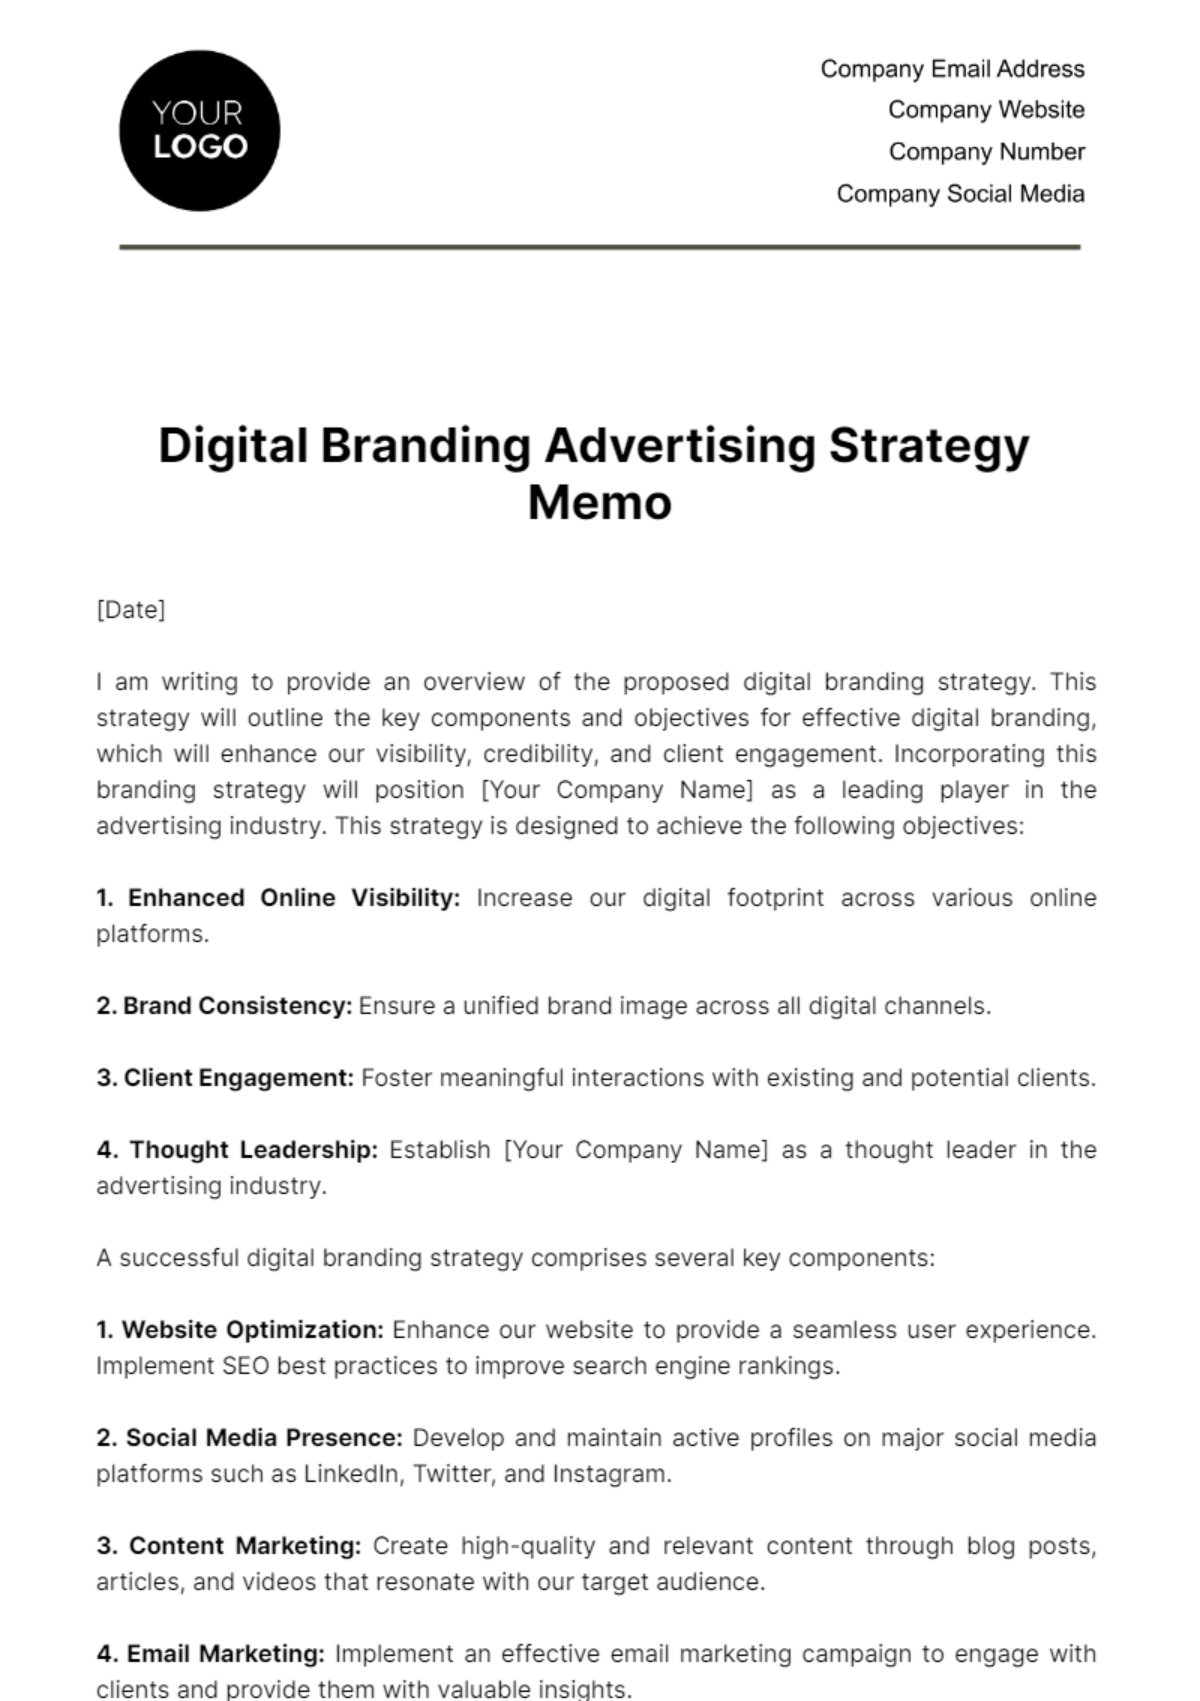 Digital Branding Advertising Strategy Memo Template